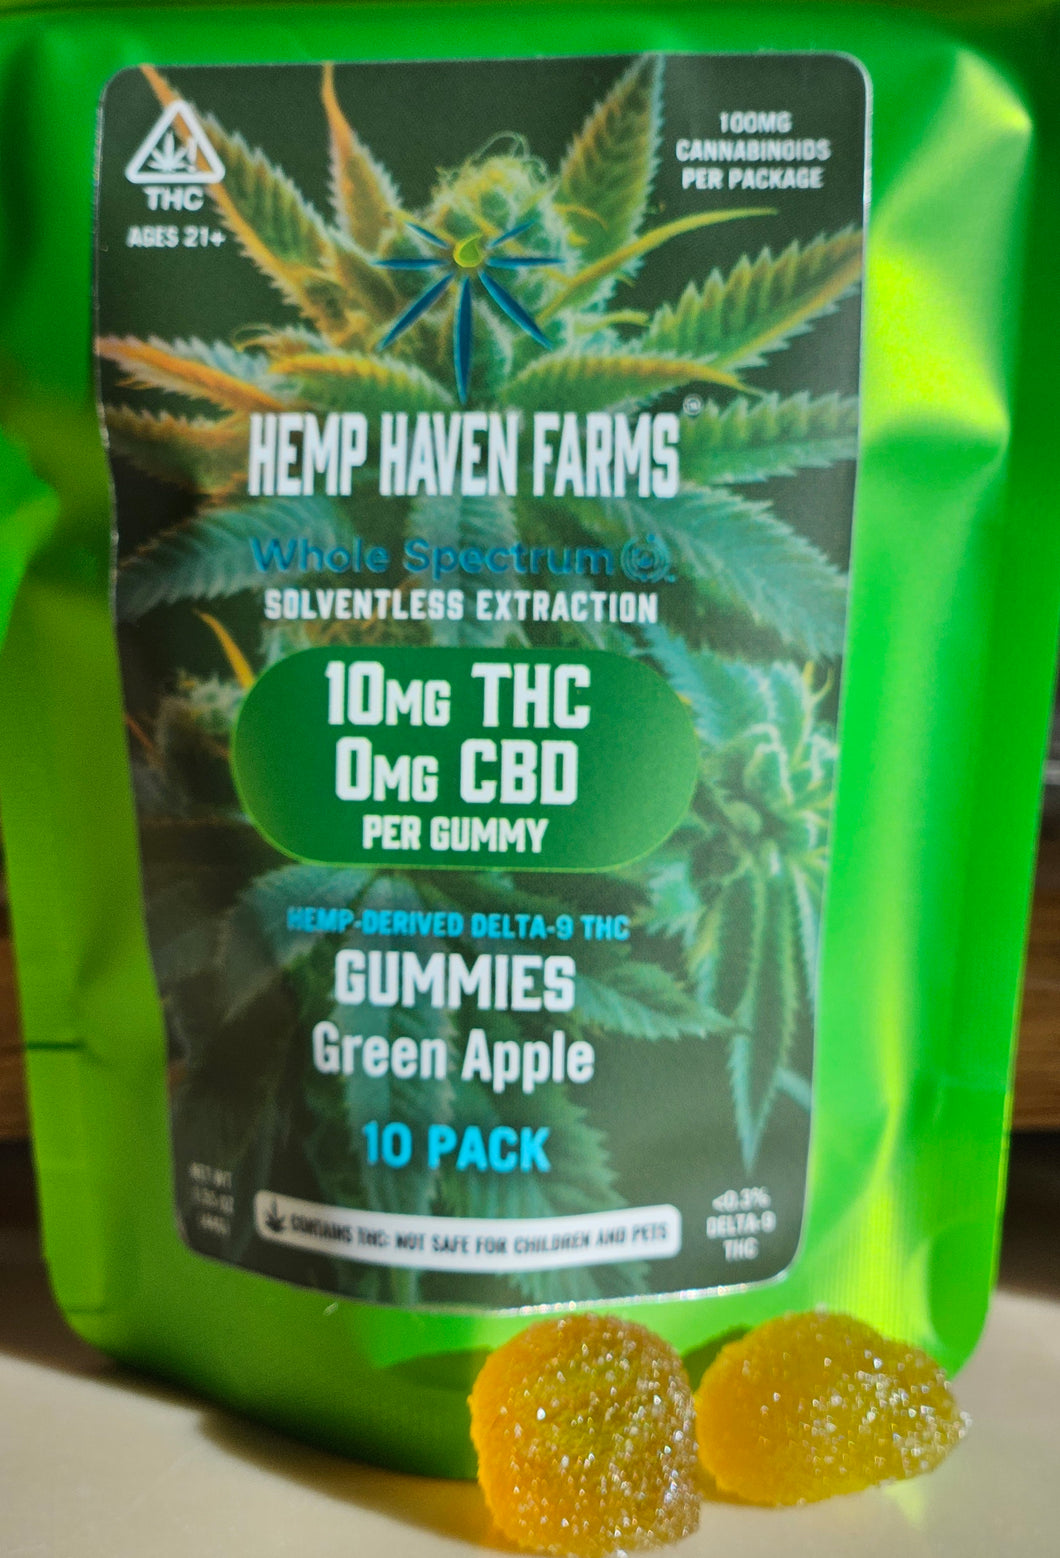 10mg THC, 0mg CBD Vegan Fruit Chew 10 pack GREEN APPLE - Chemical free, Solvent free, CO2 free